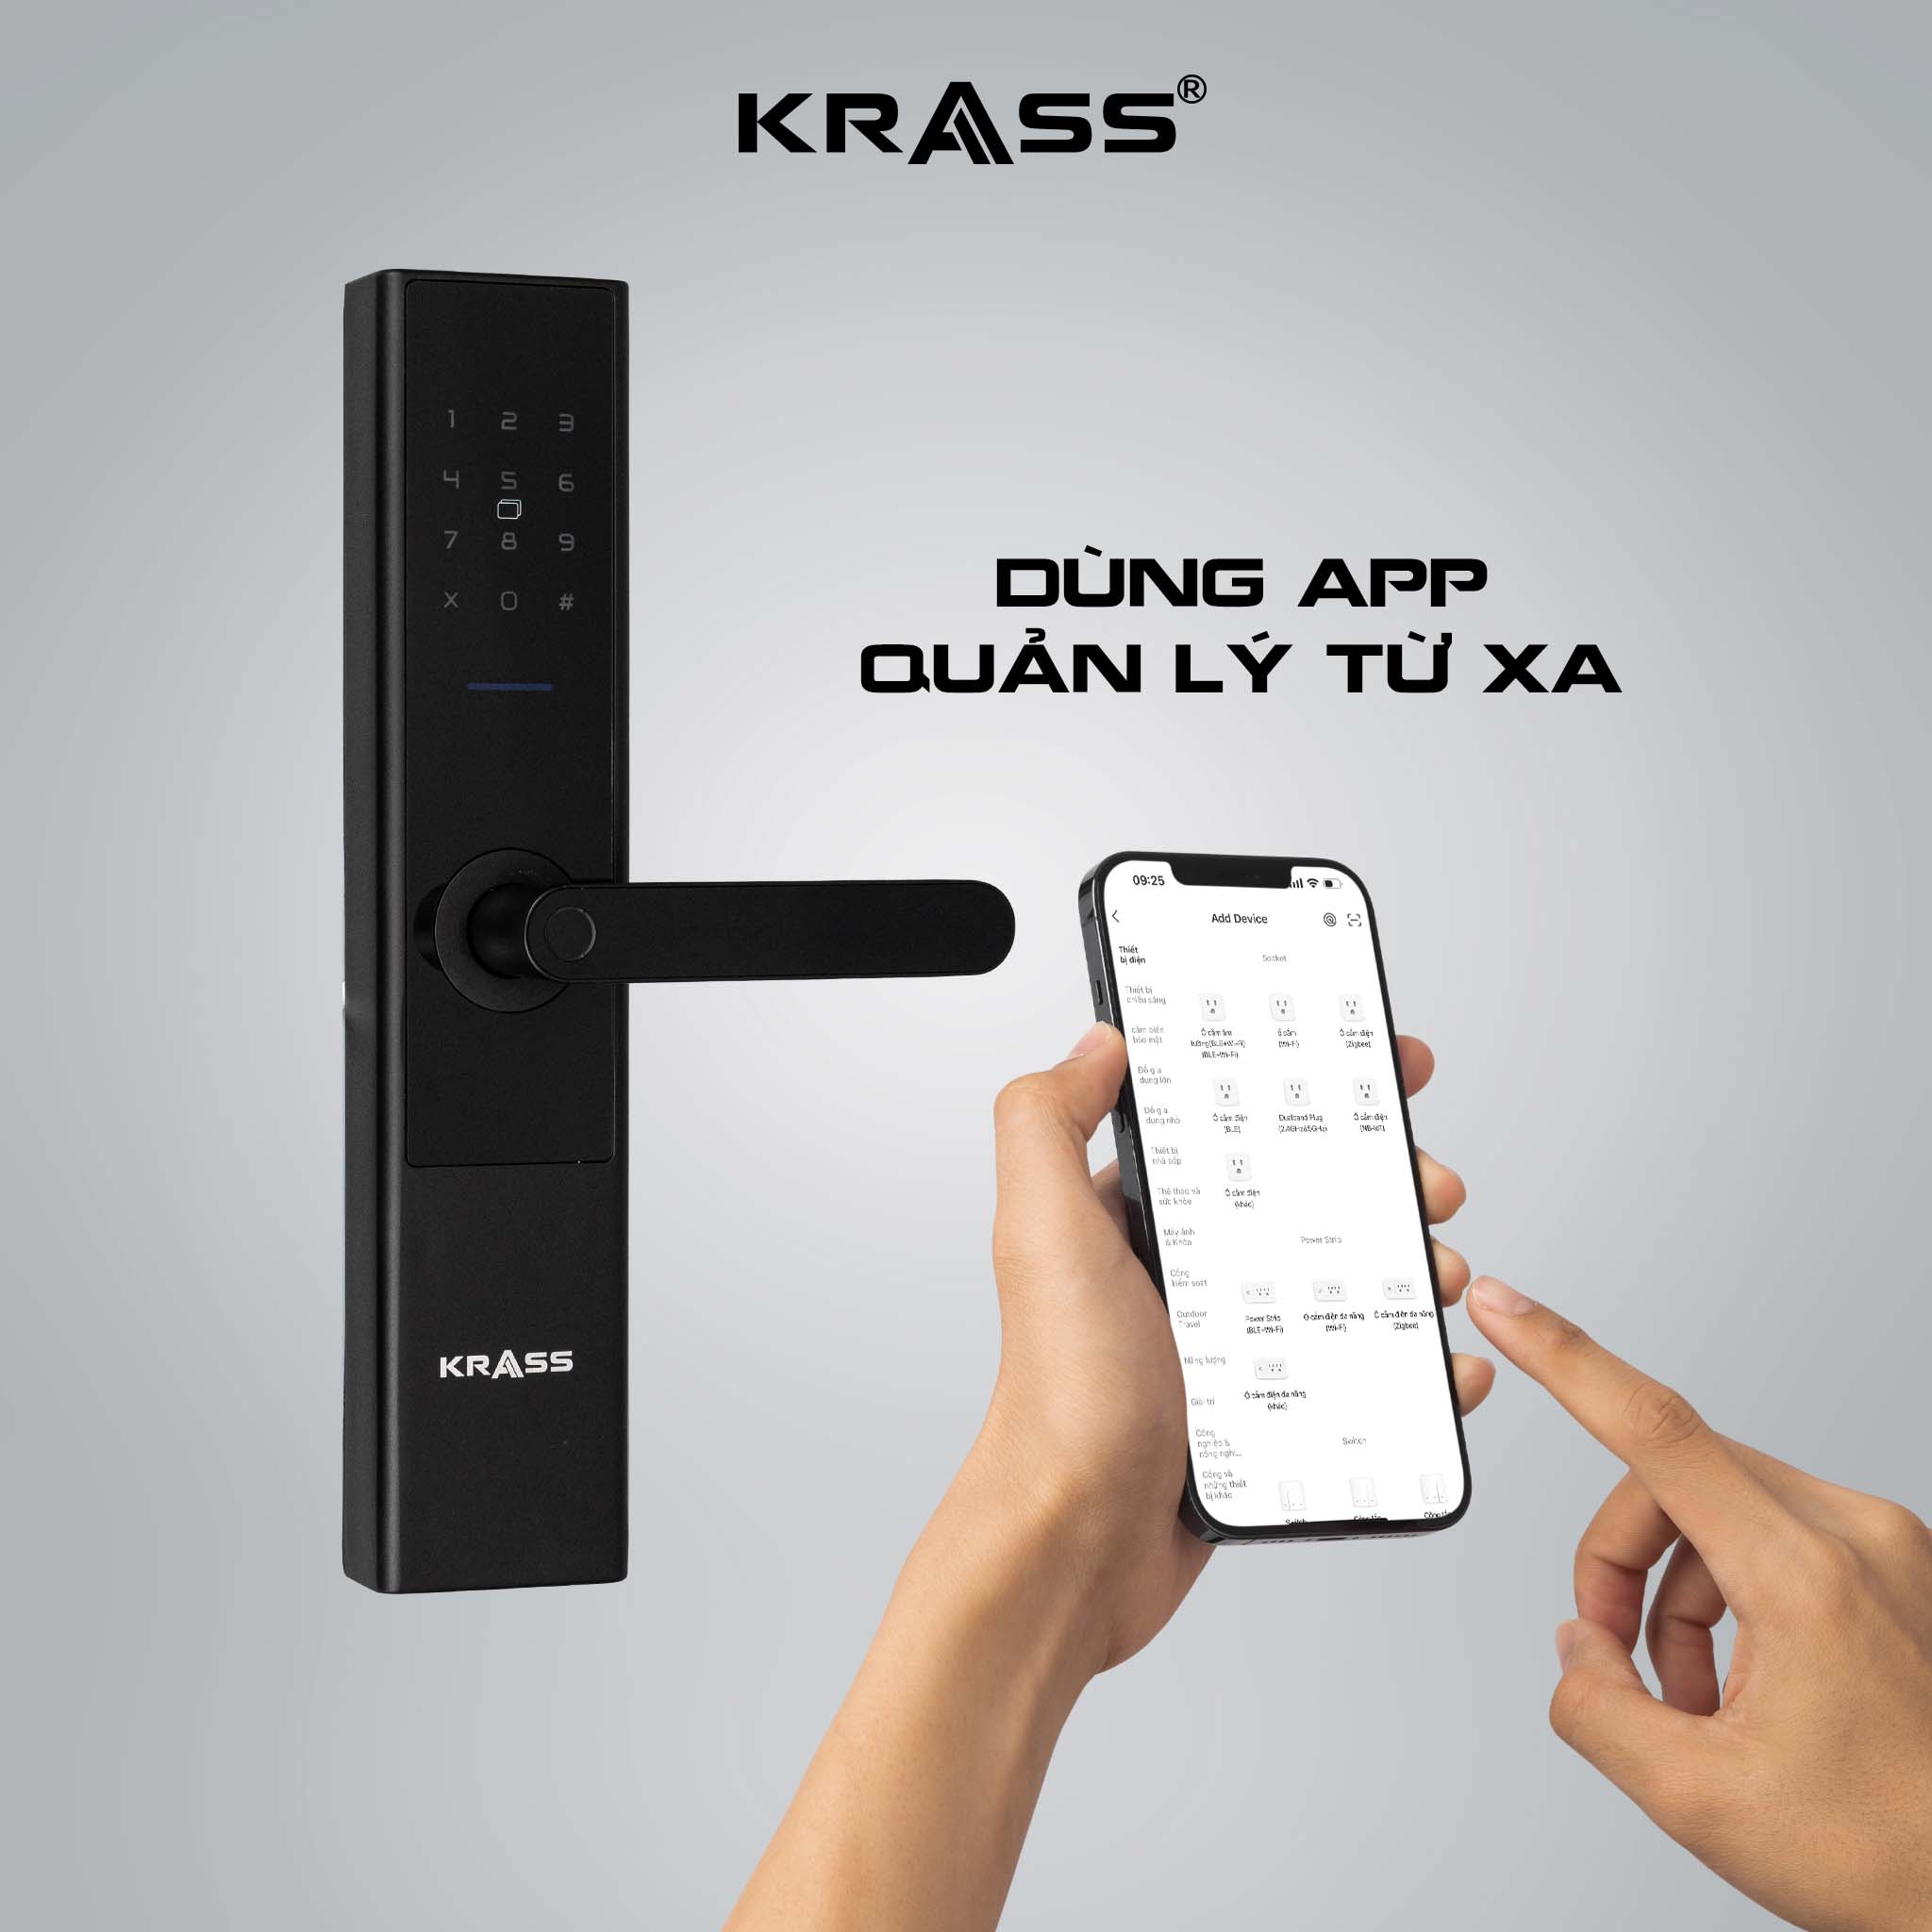 Krass K68 kết nối app điện thoại 